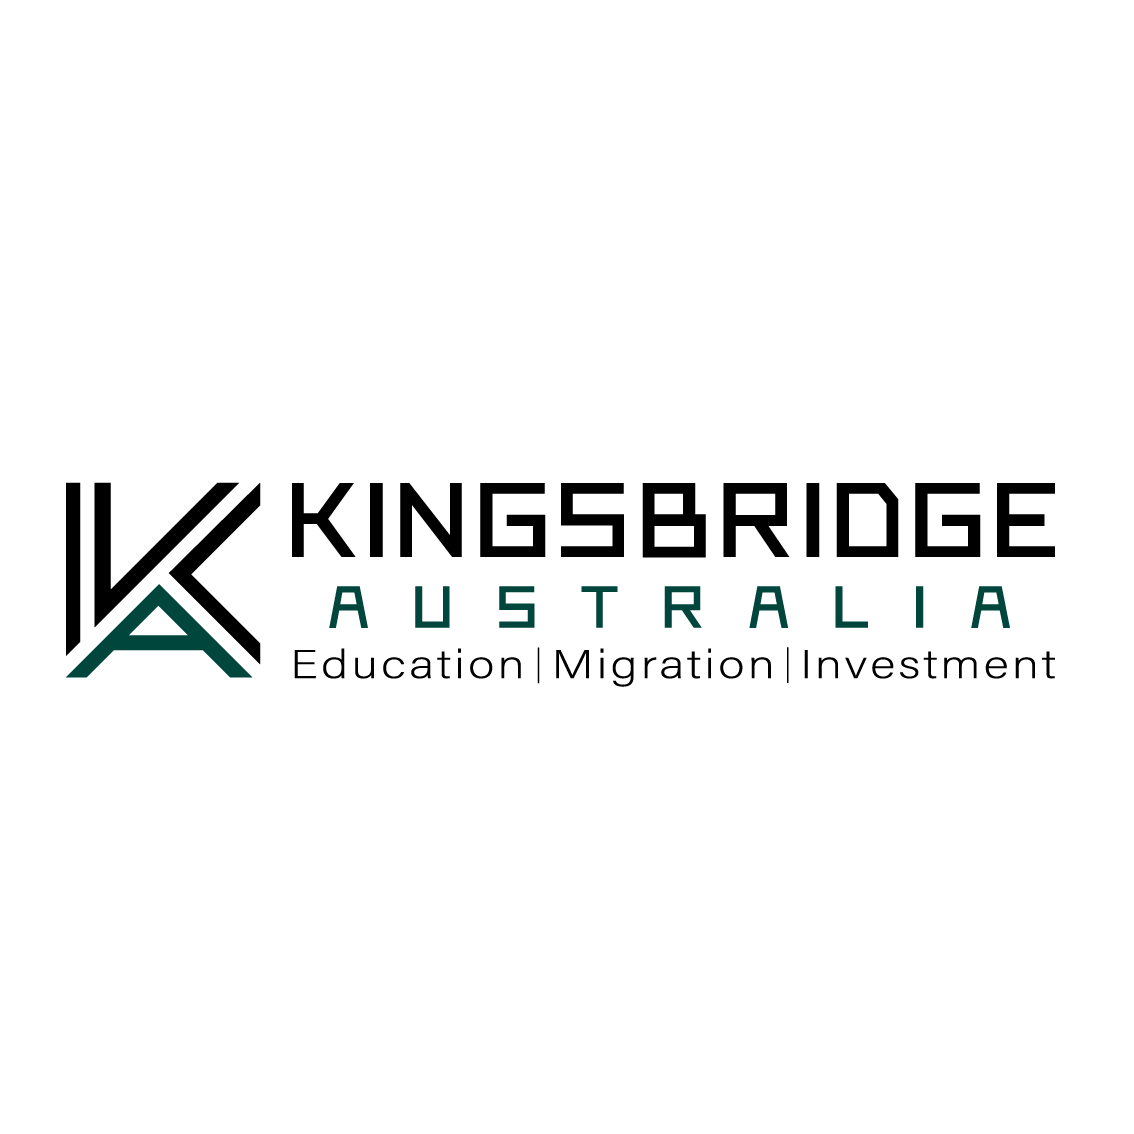 Kingsbridge Australia - Perth Migration Agents & Education Consultant